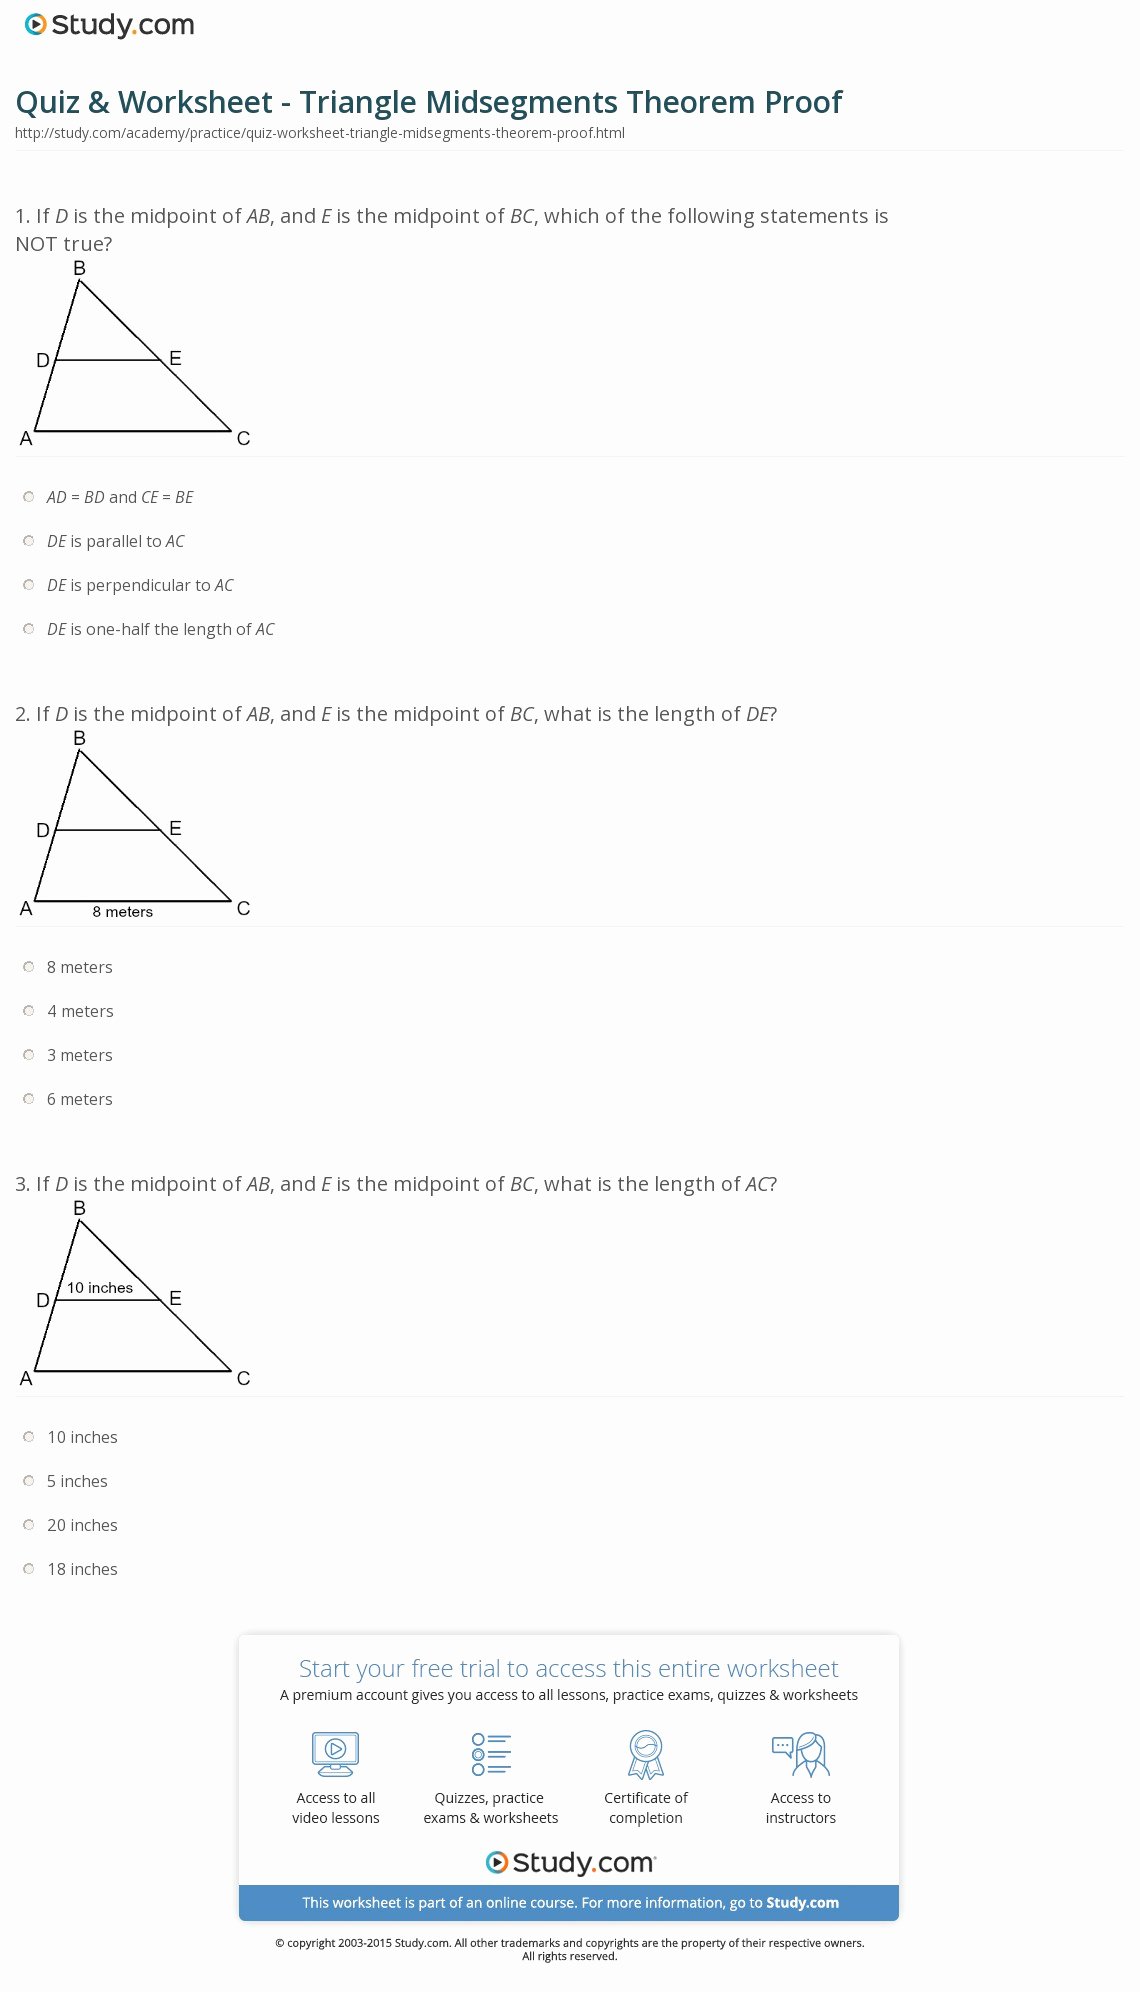 Midsegment theorem Worksheet Answer Key Unique Quiz &amp; Worksheet Triangle Midsegments theorem Proof